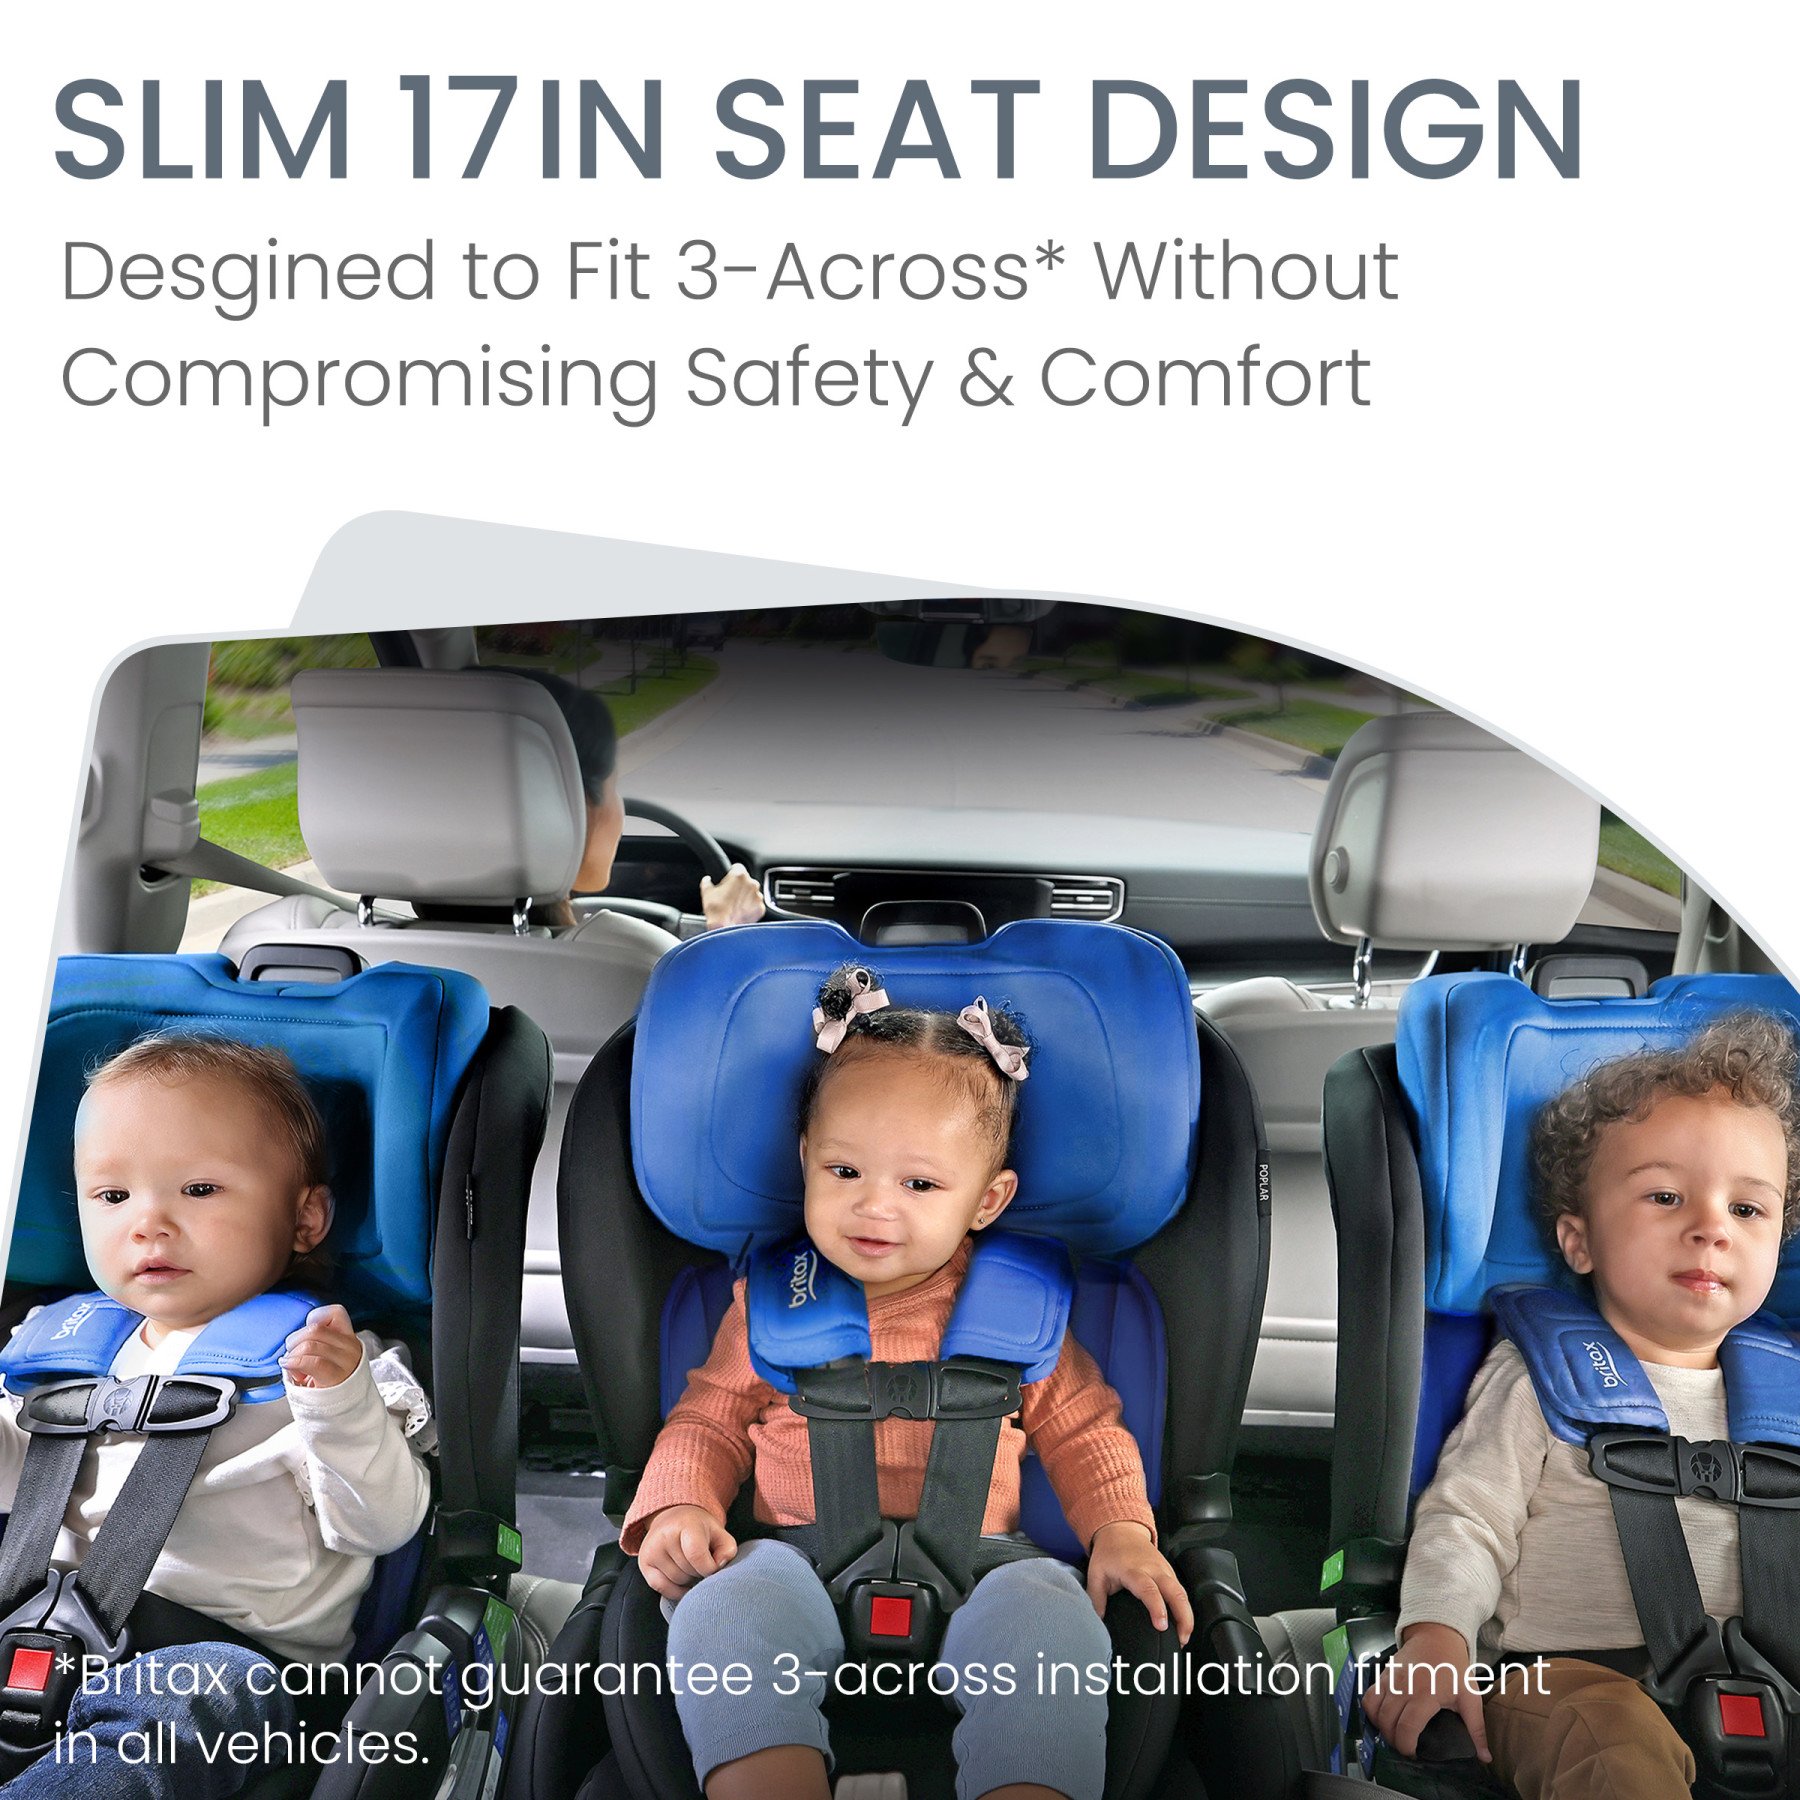 Slim 17in Seat Design lifestyle with Cobalt Onyx fashion